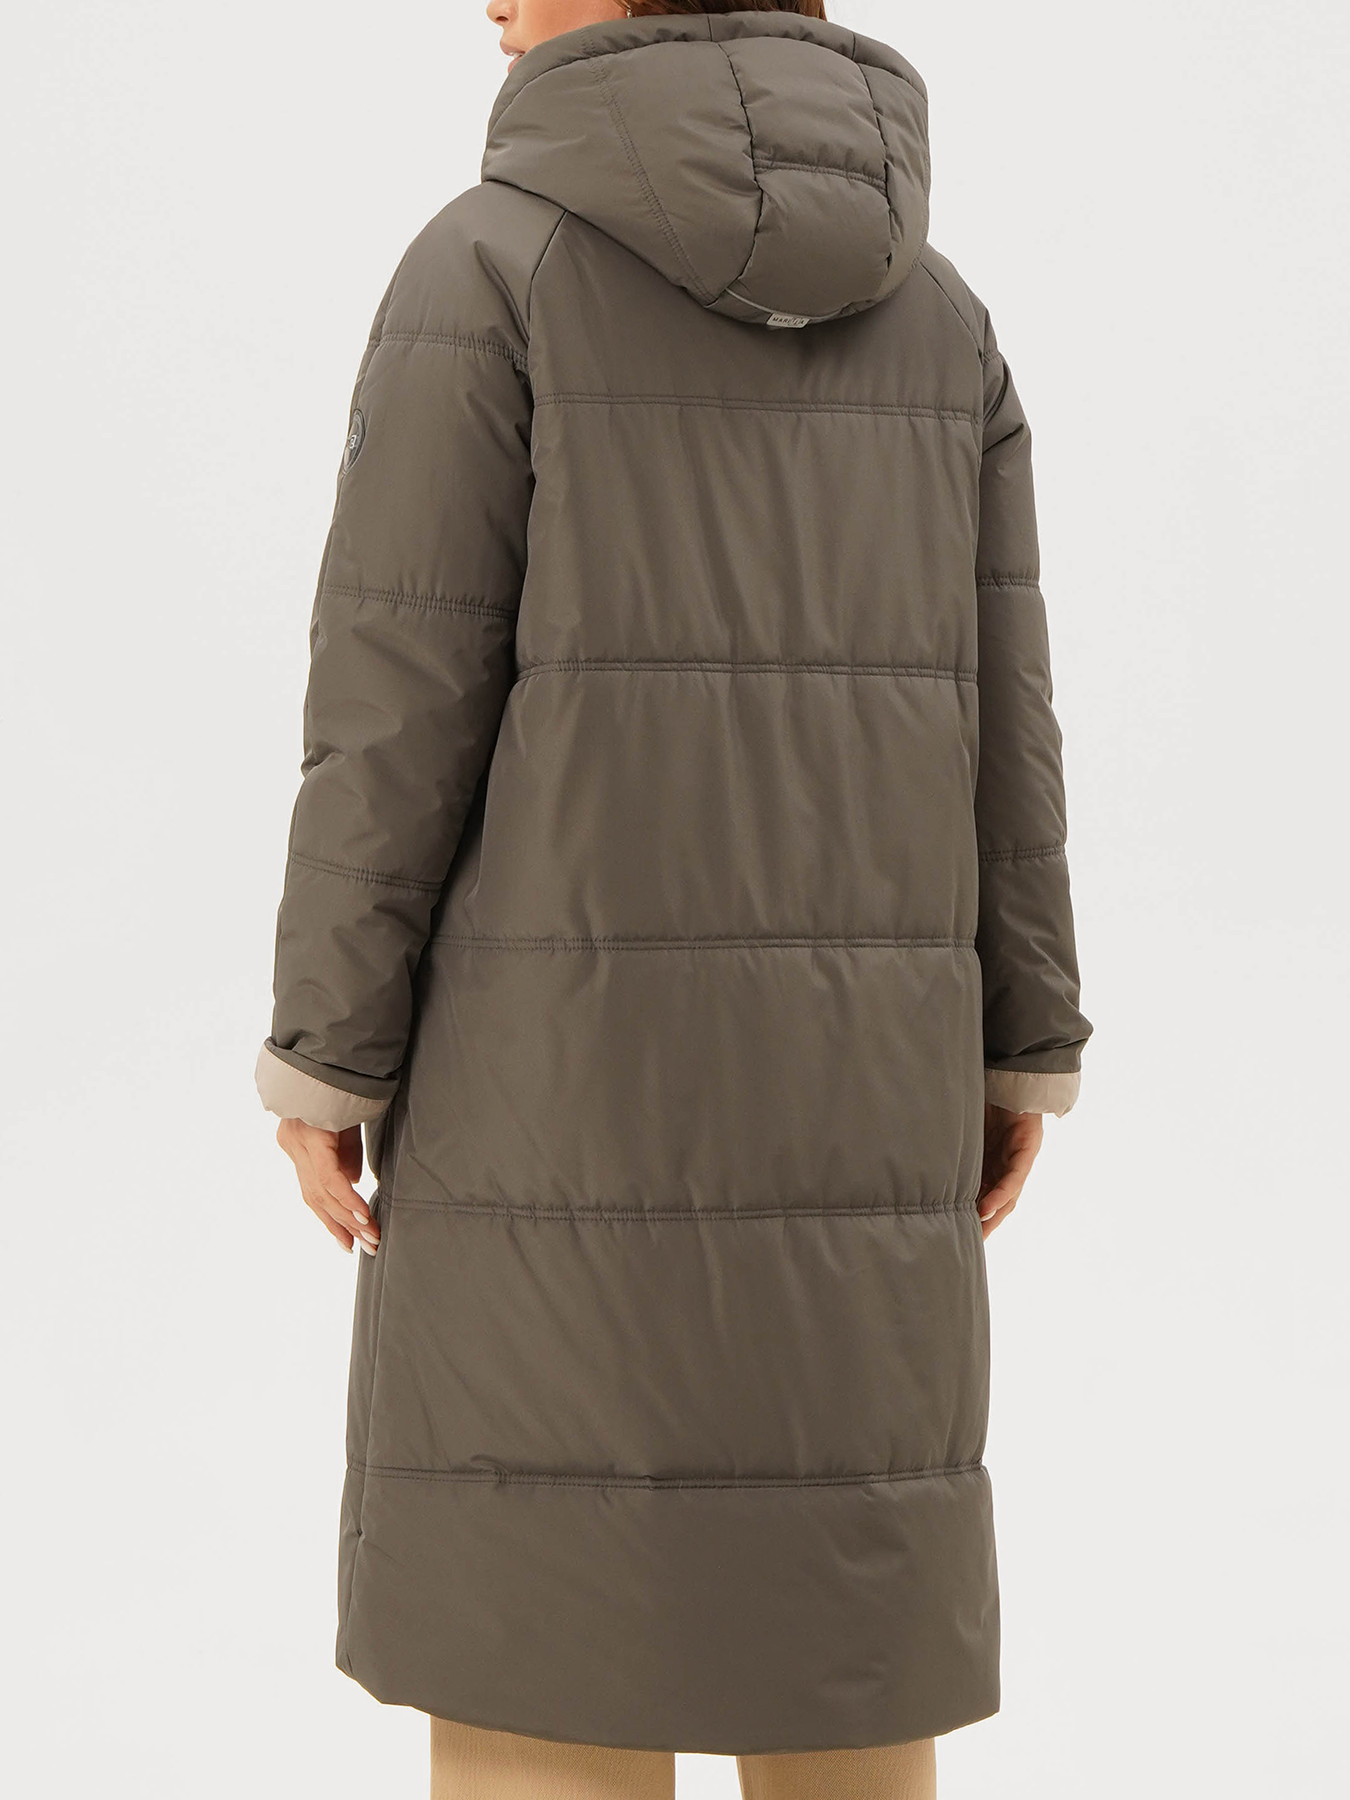 Пальто зимнее Maritta 433583-025, цвет хаки, размер 48 - фото 6